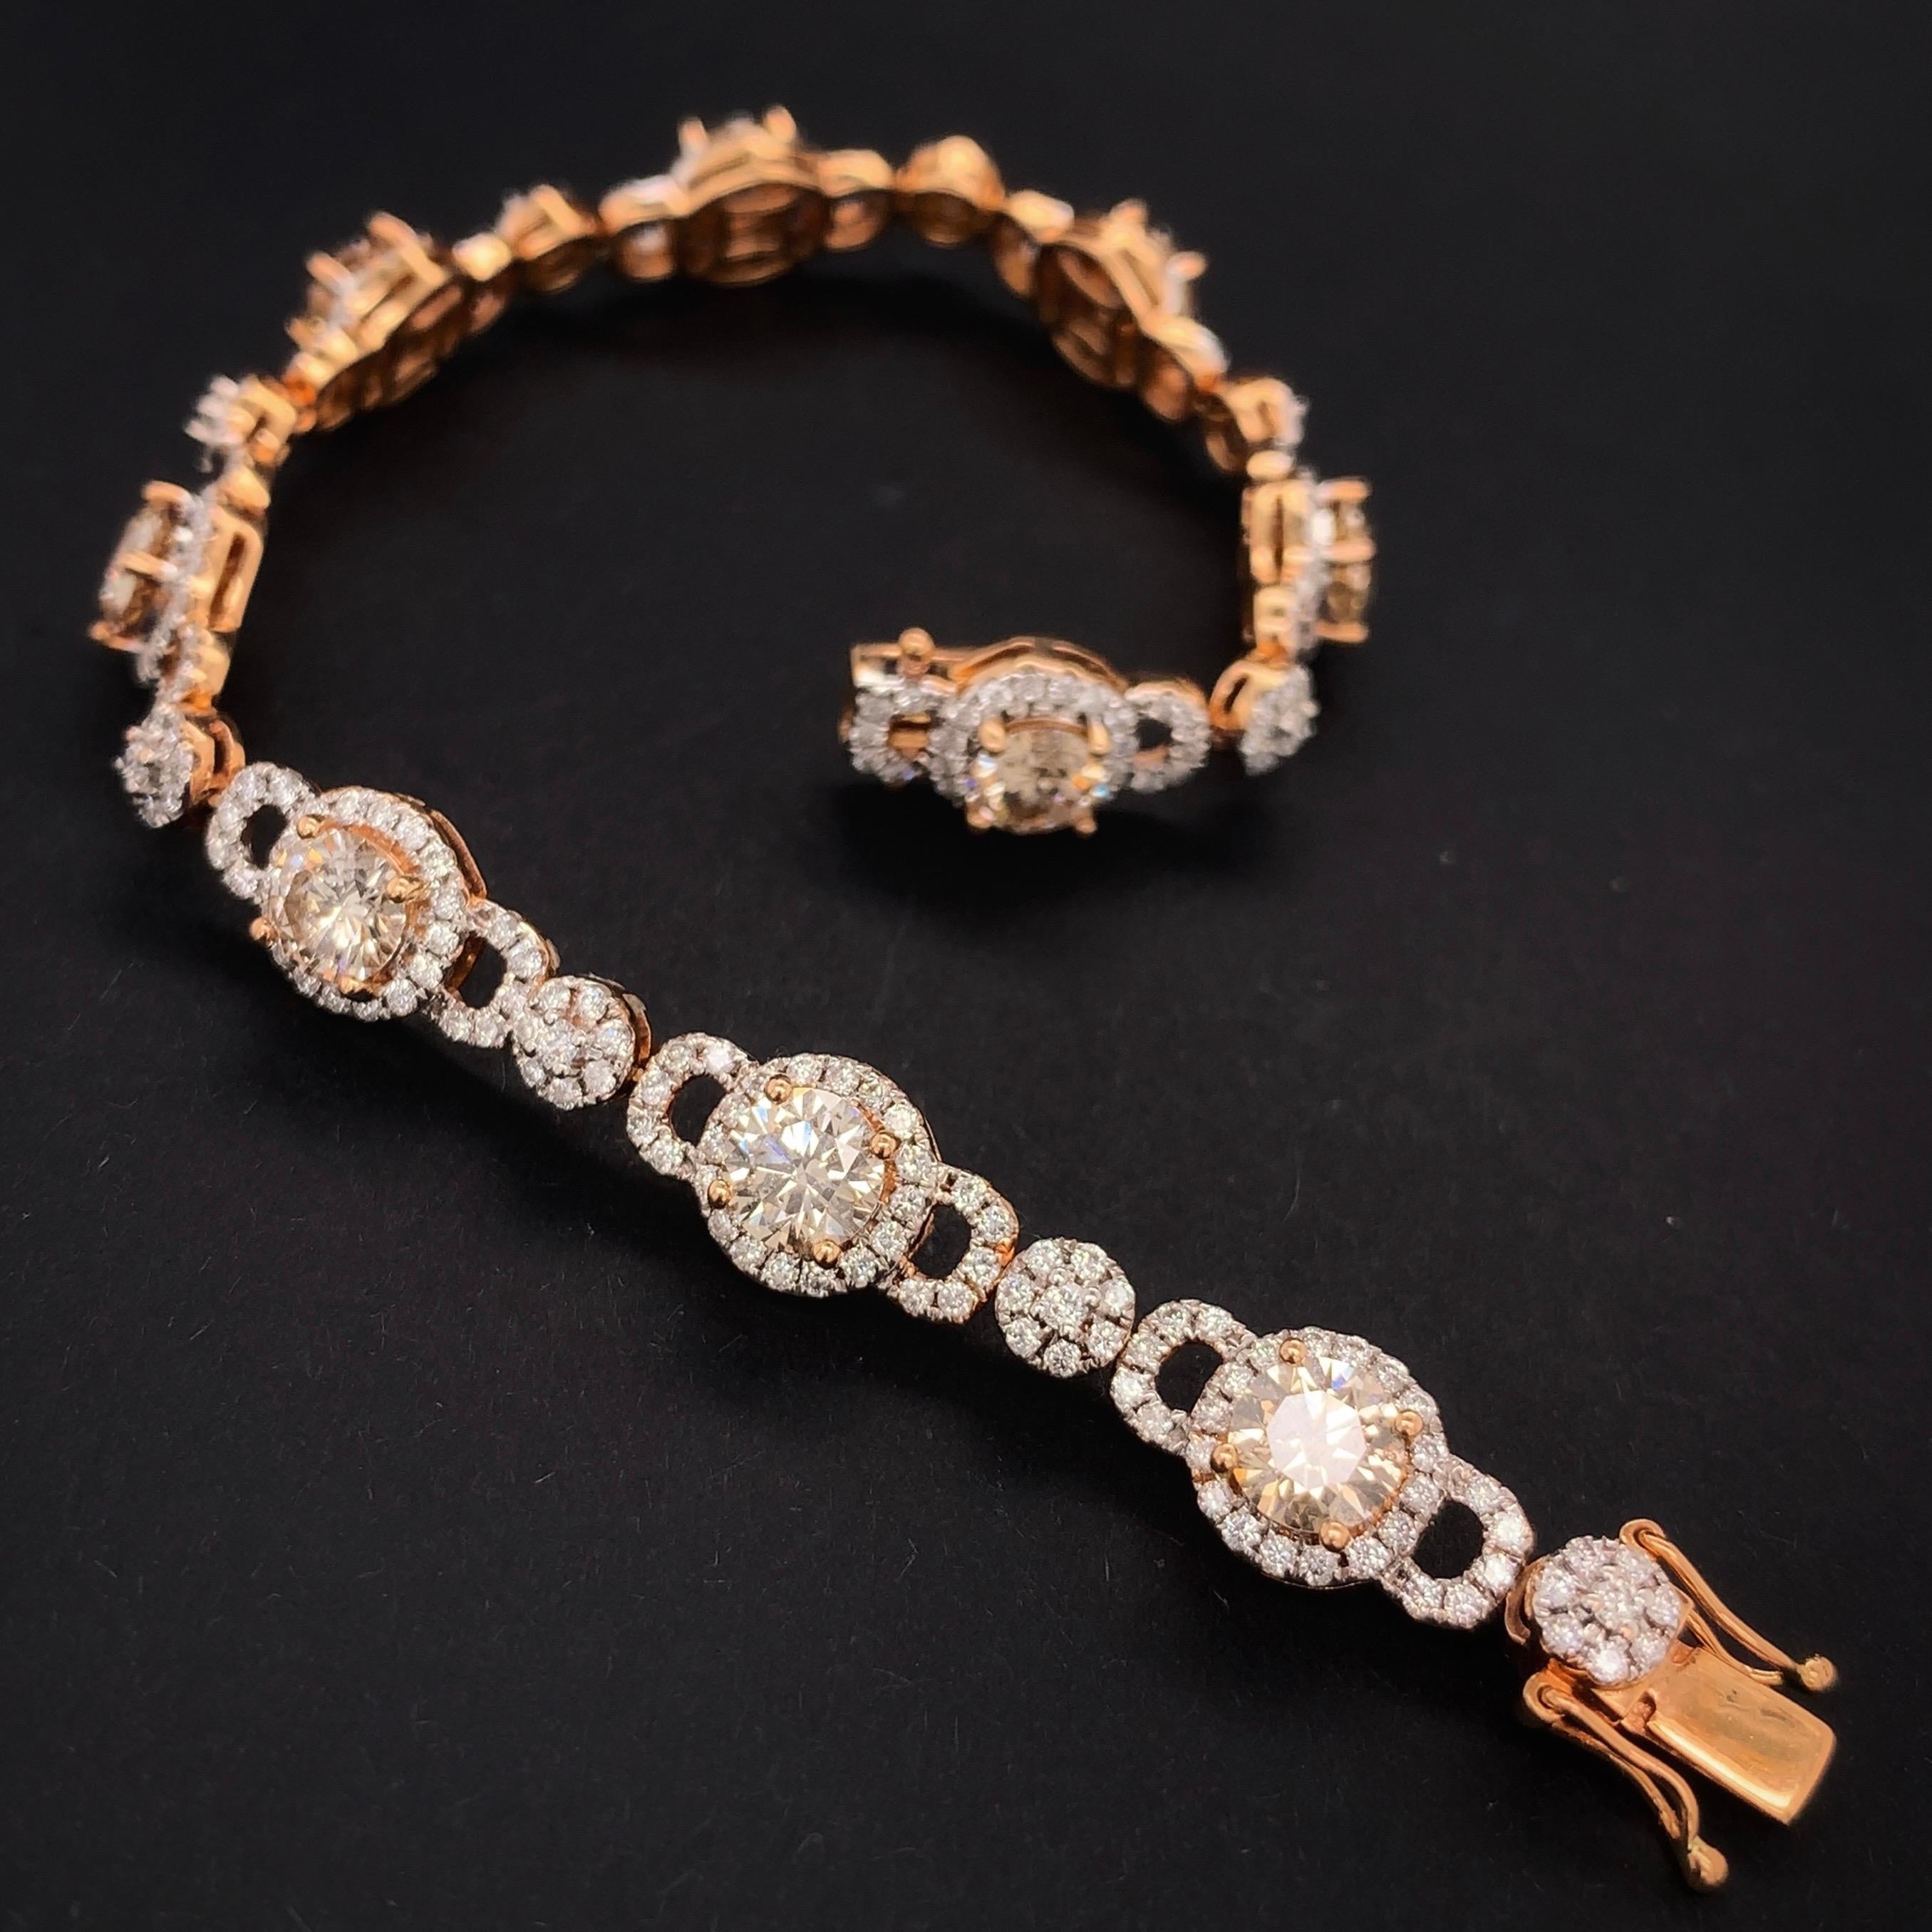 Contemporary 6.06 Carat Fancy Light Brown Diamond Bracelet